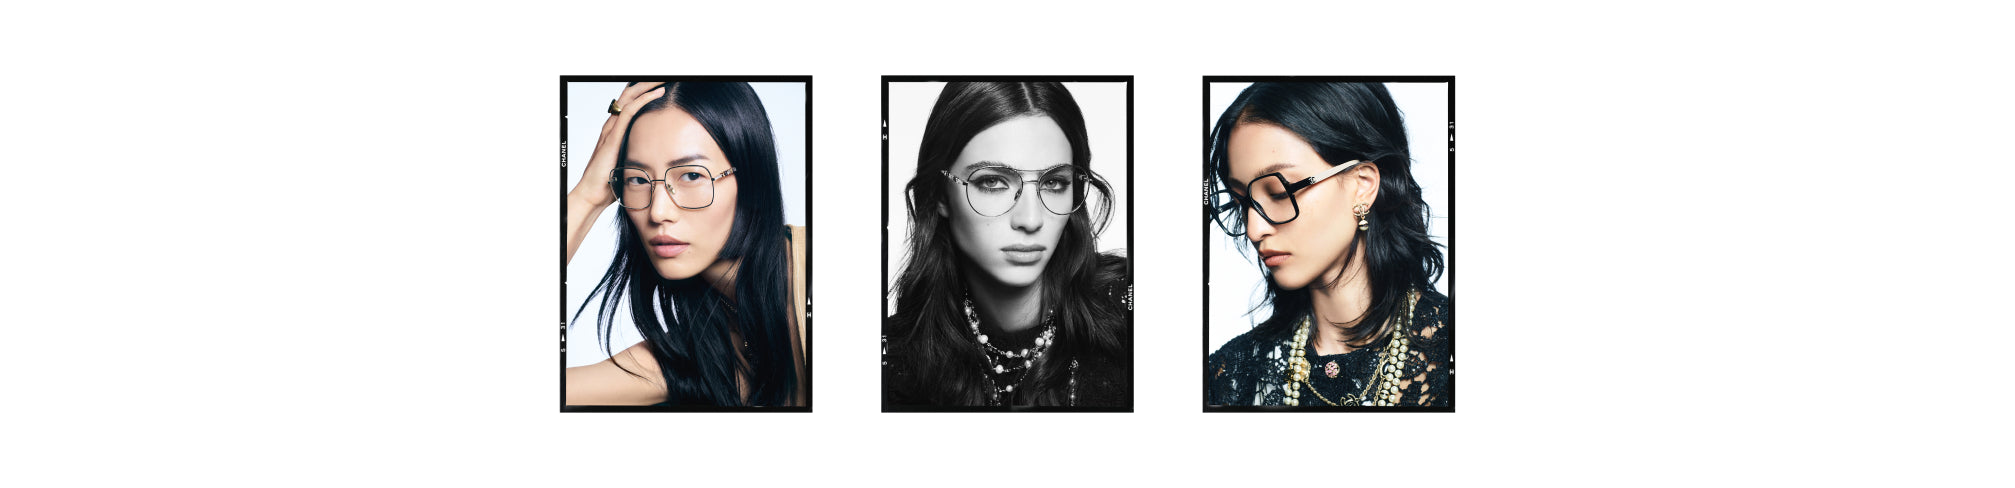 Chanel sunglasses with black textured square frame and black transparent  lenses - BELORN